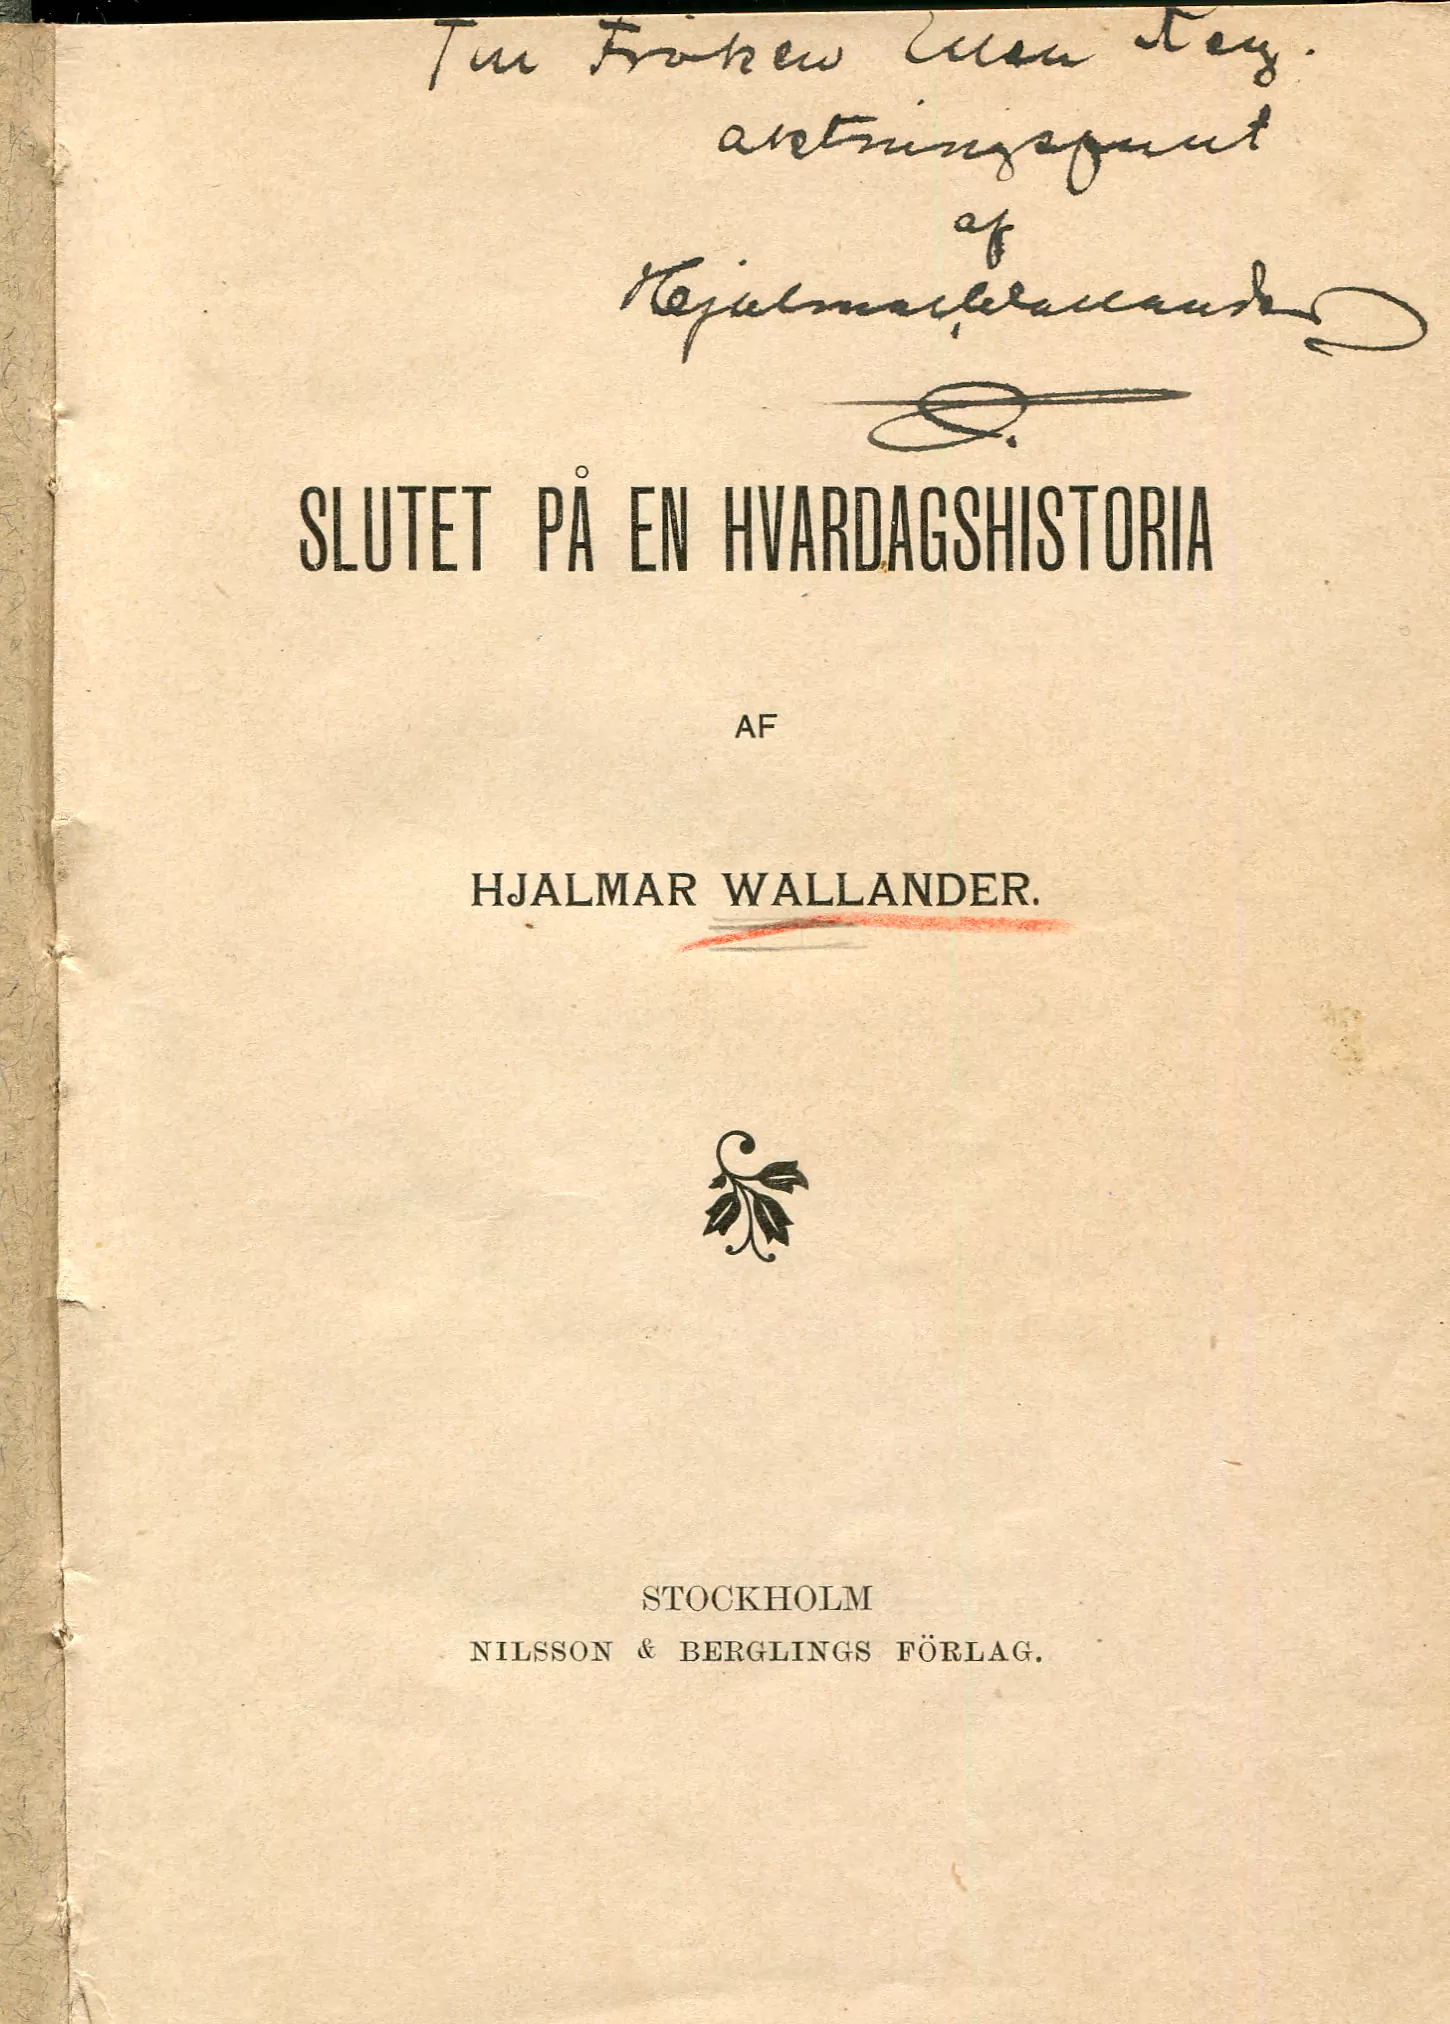 Slutet på en hvardagshistoria, Stockholm 1902